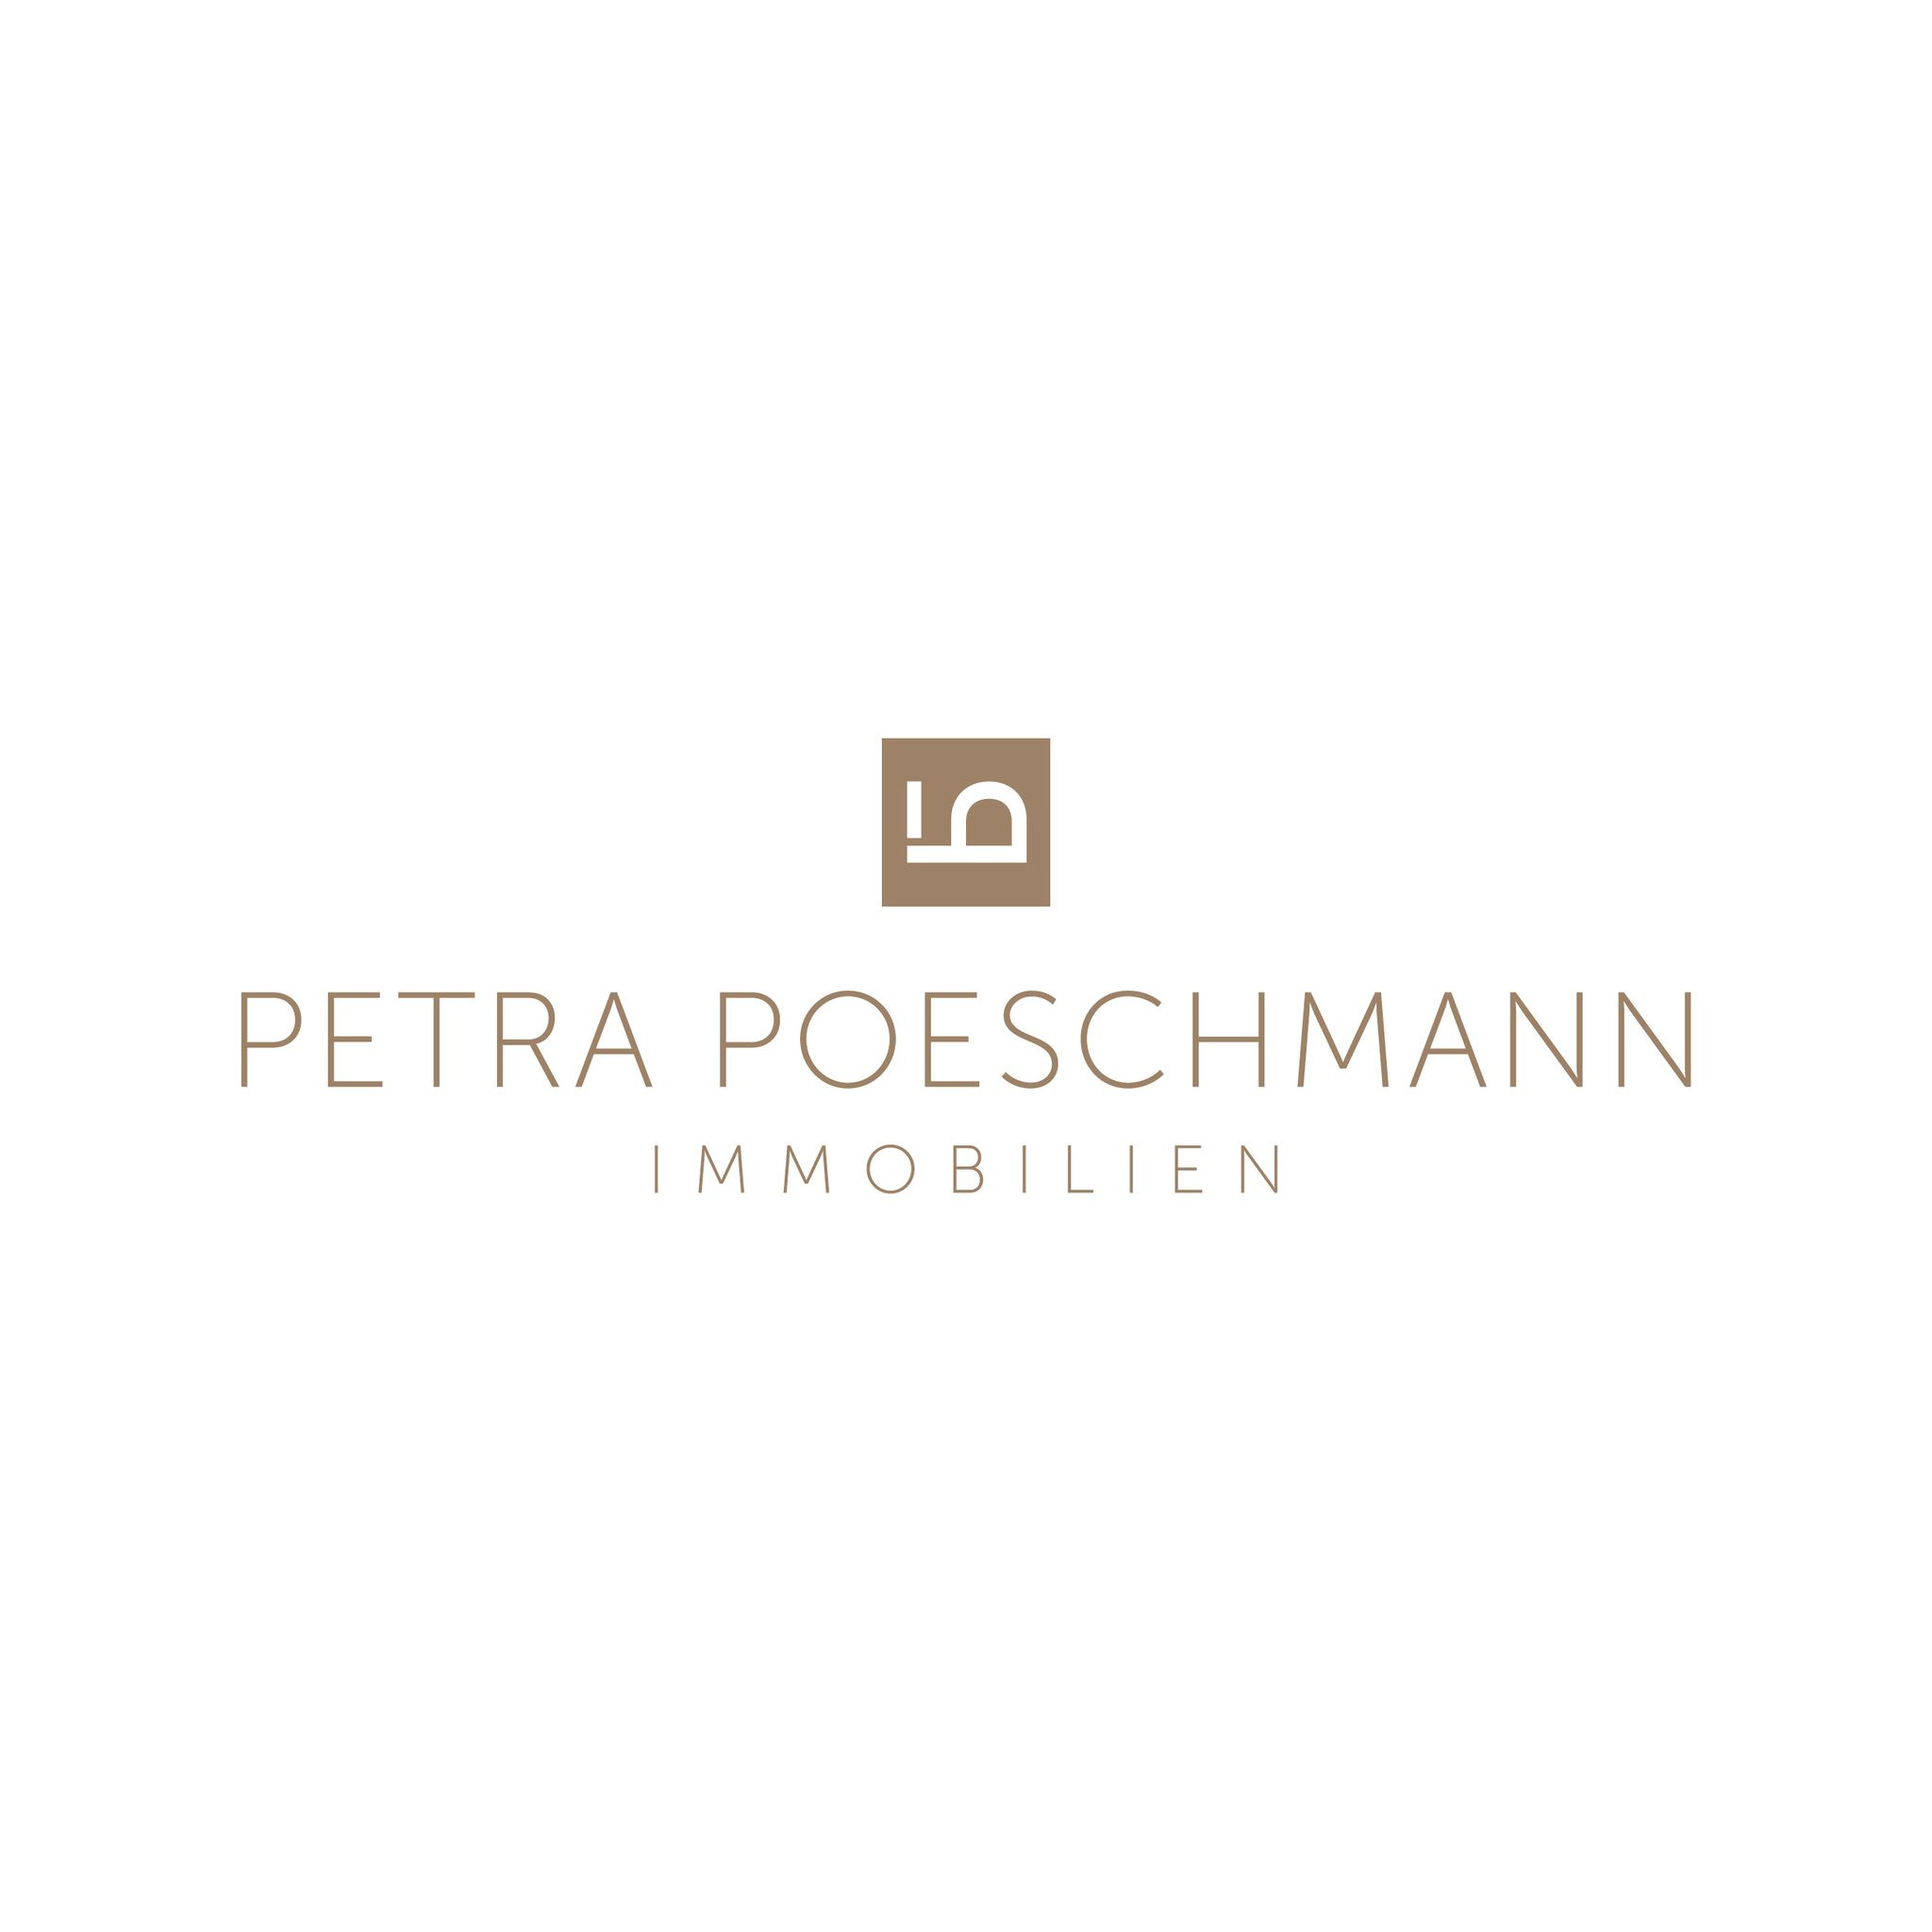 Petra Poeschmann Immobilienmakler Ingolstadt